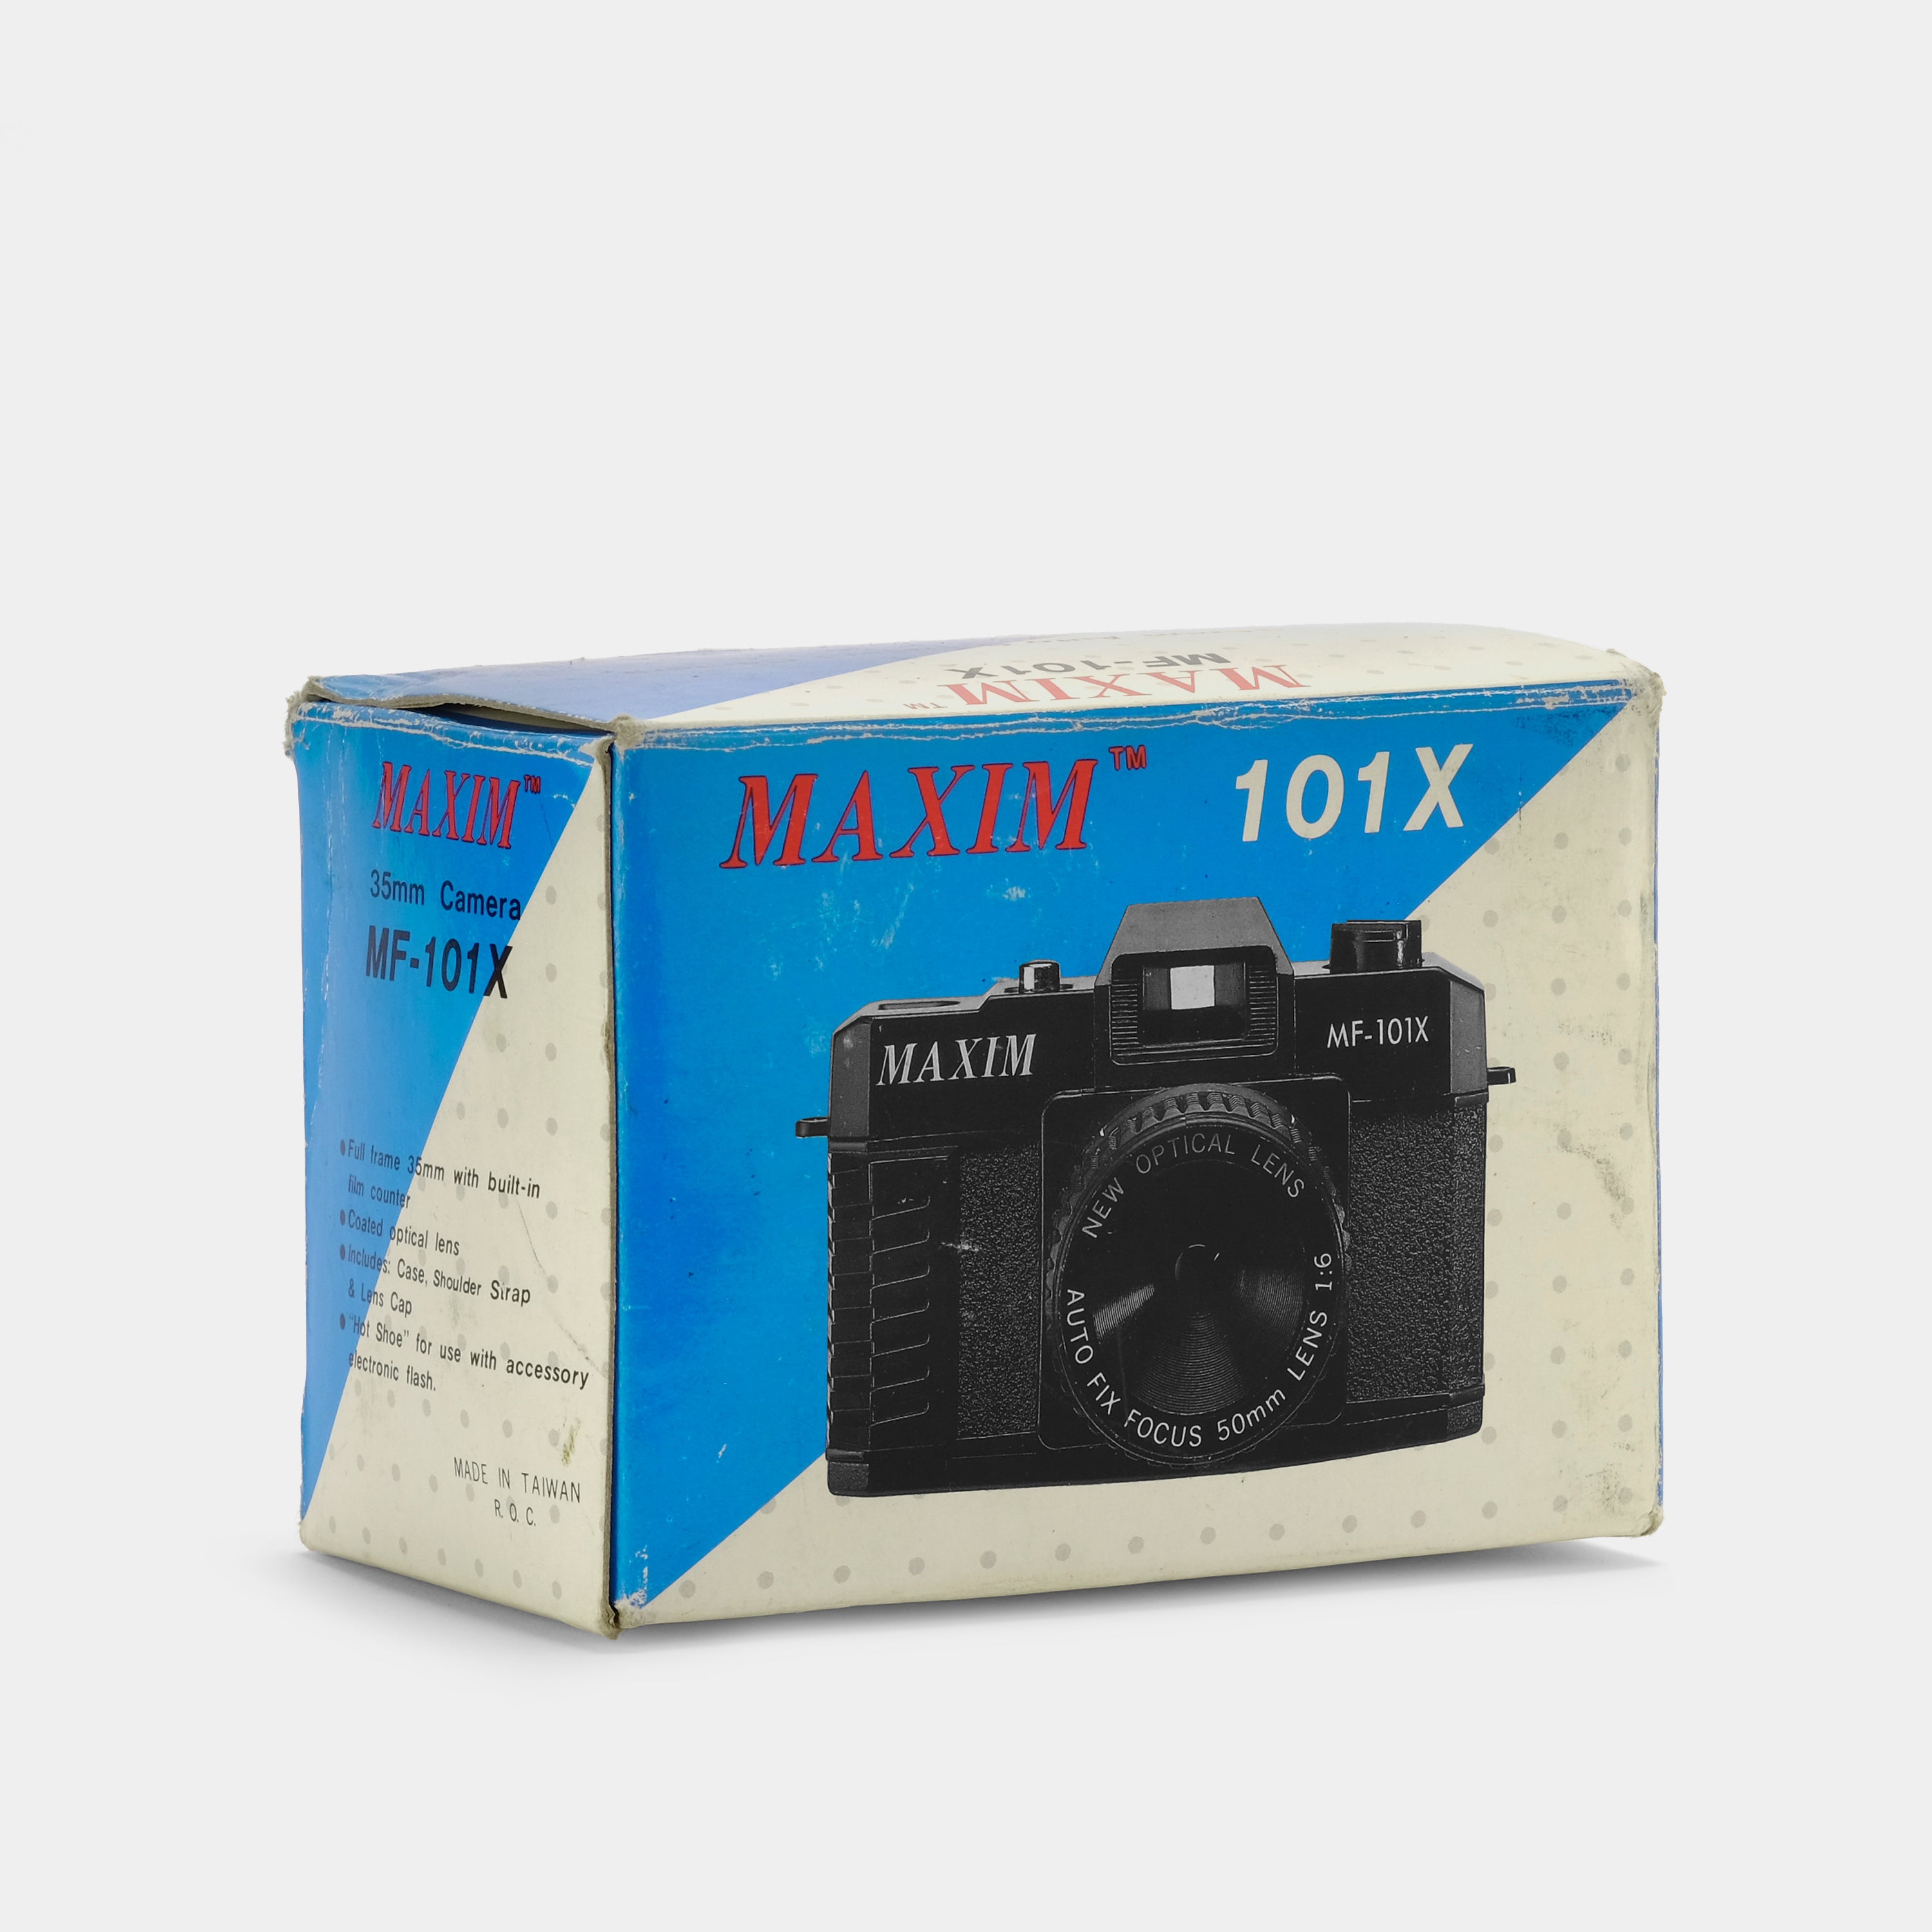 Maxim MF-101X 35mm Film Camera